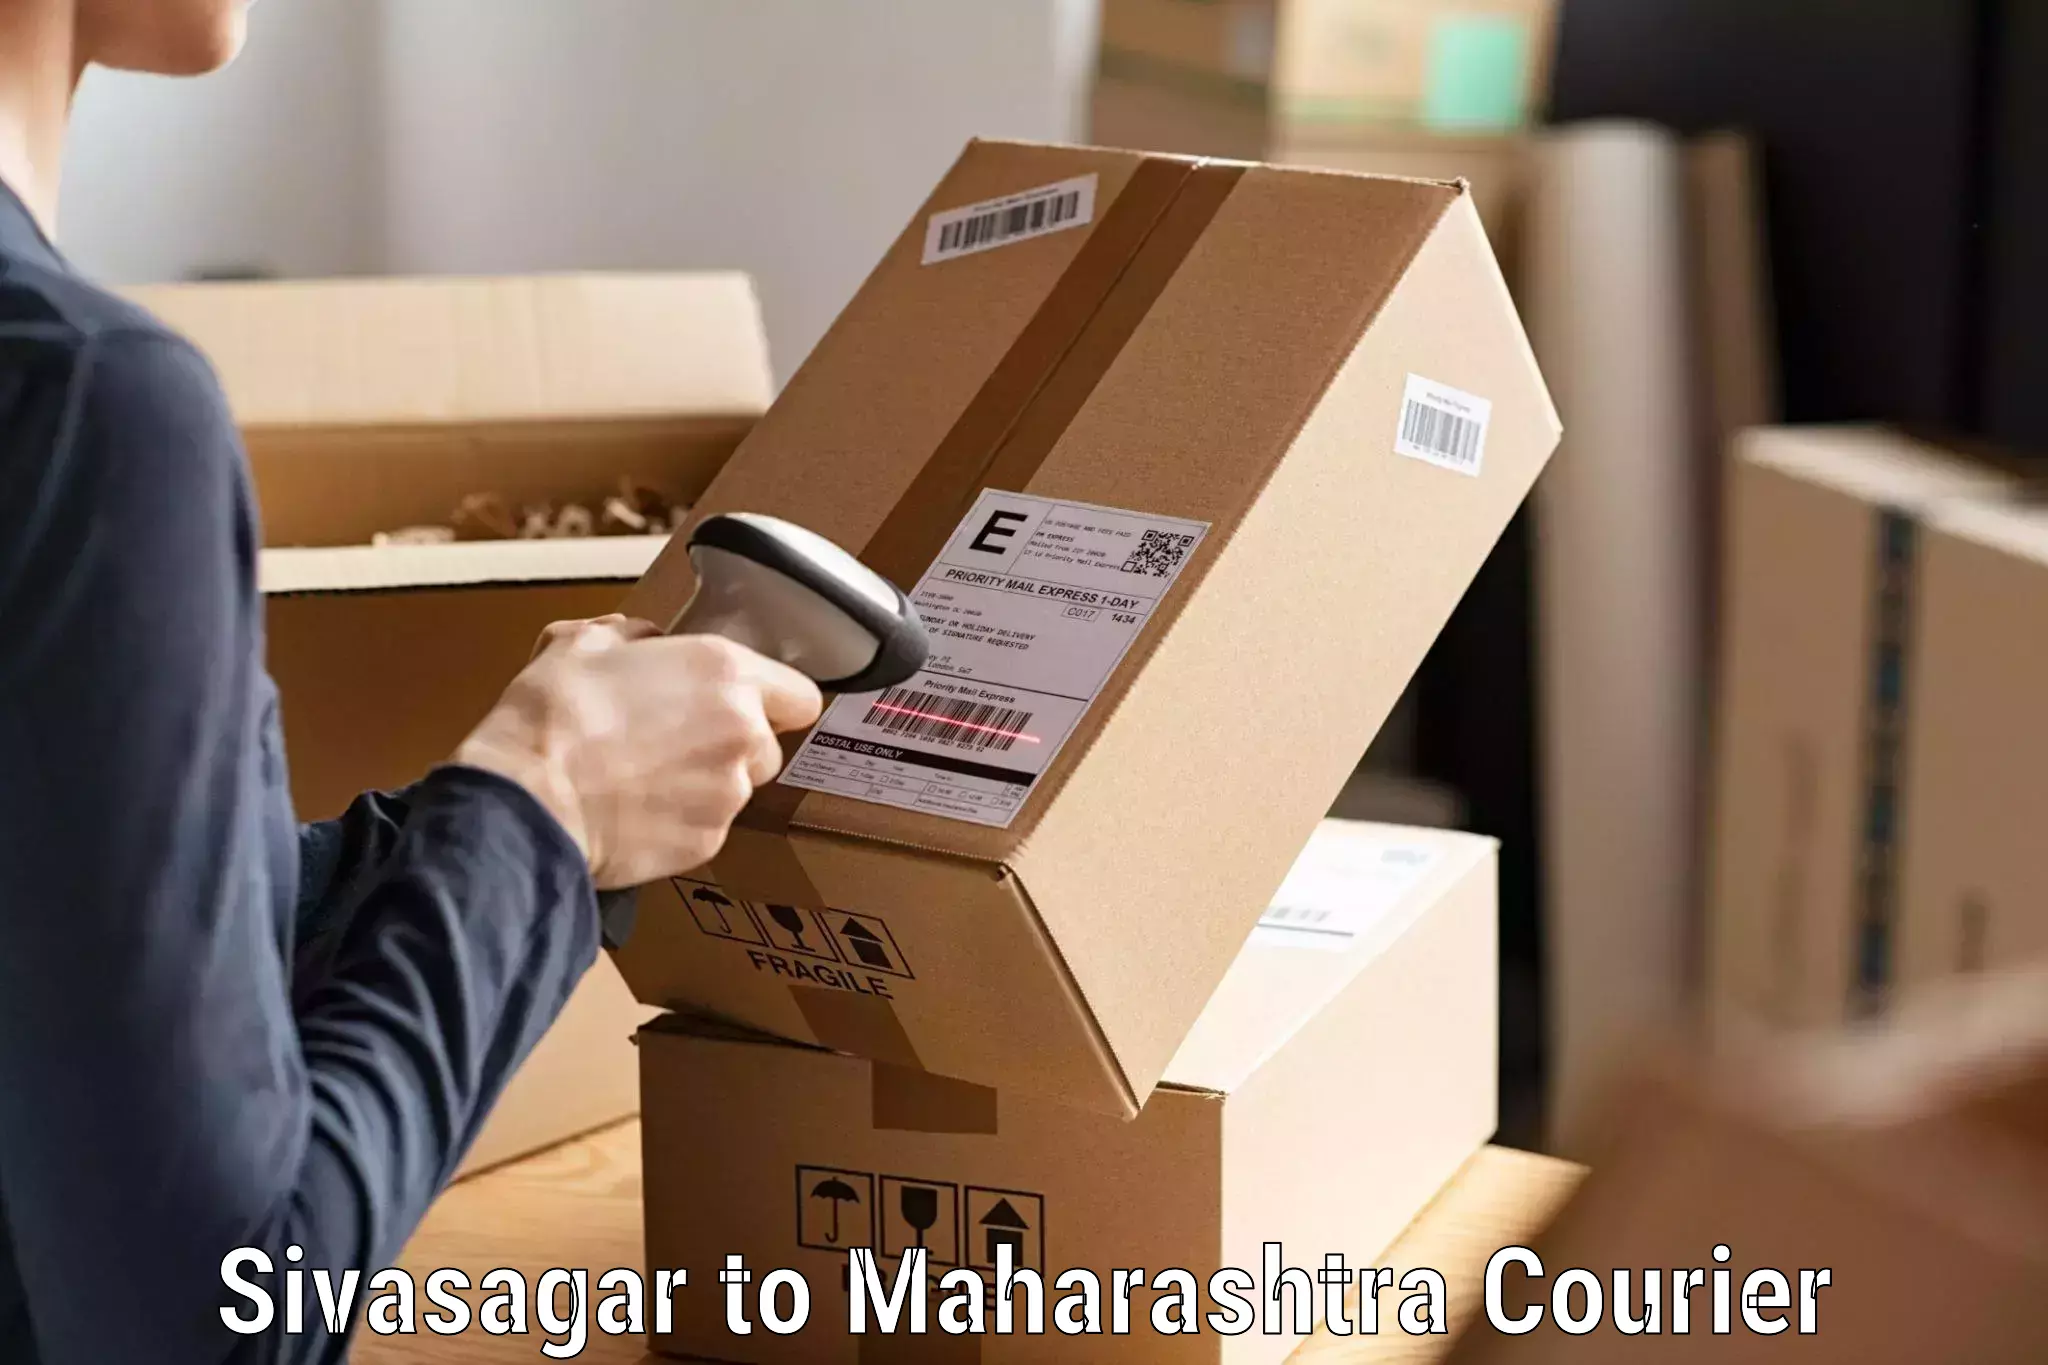 Expedited shipping methods Sivasagar to Kannad